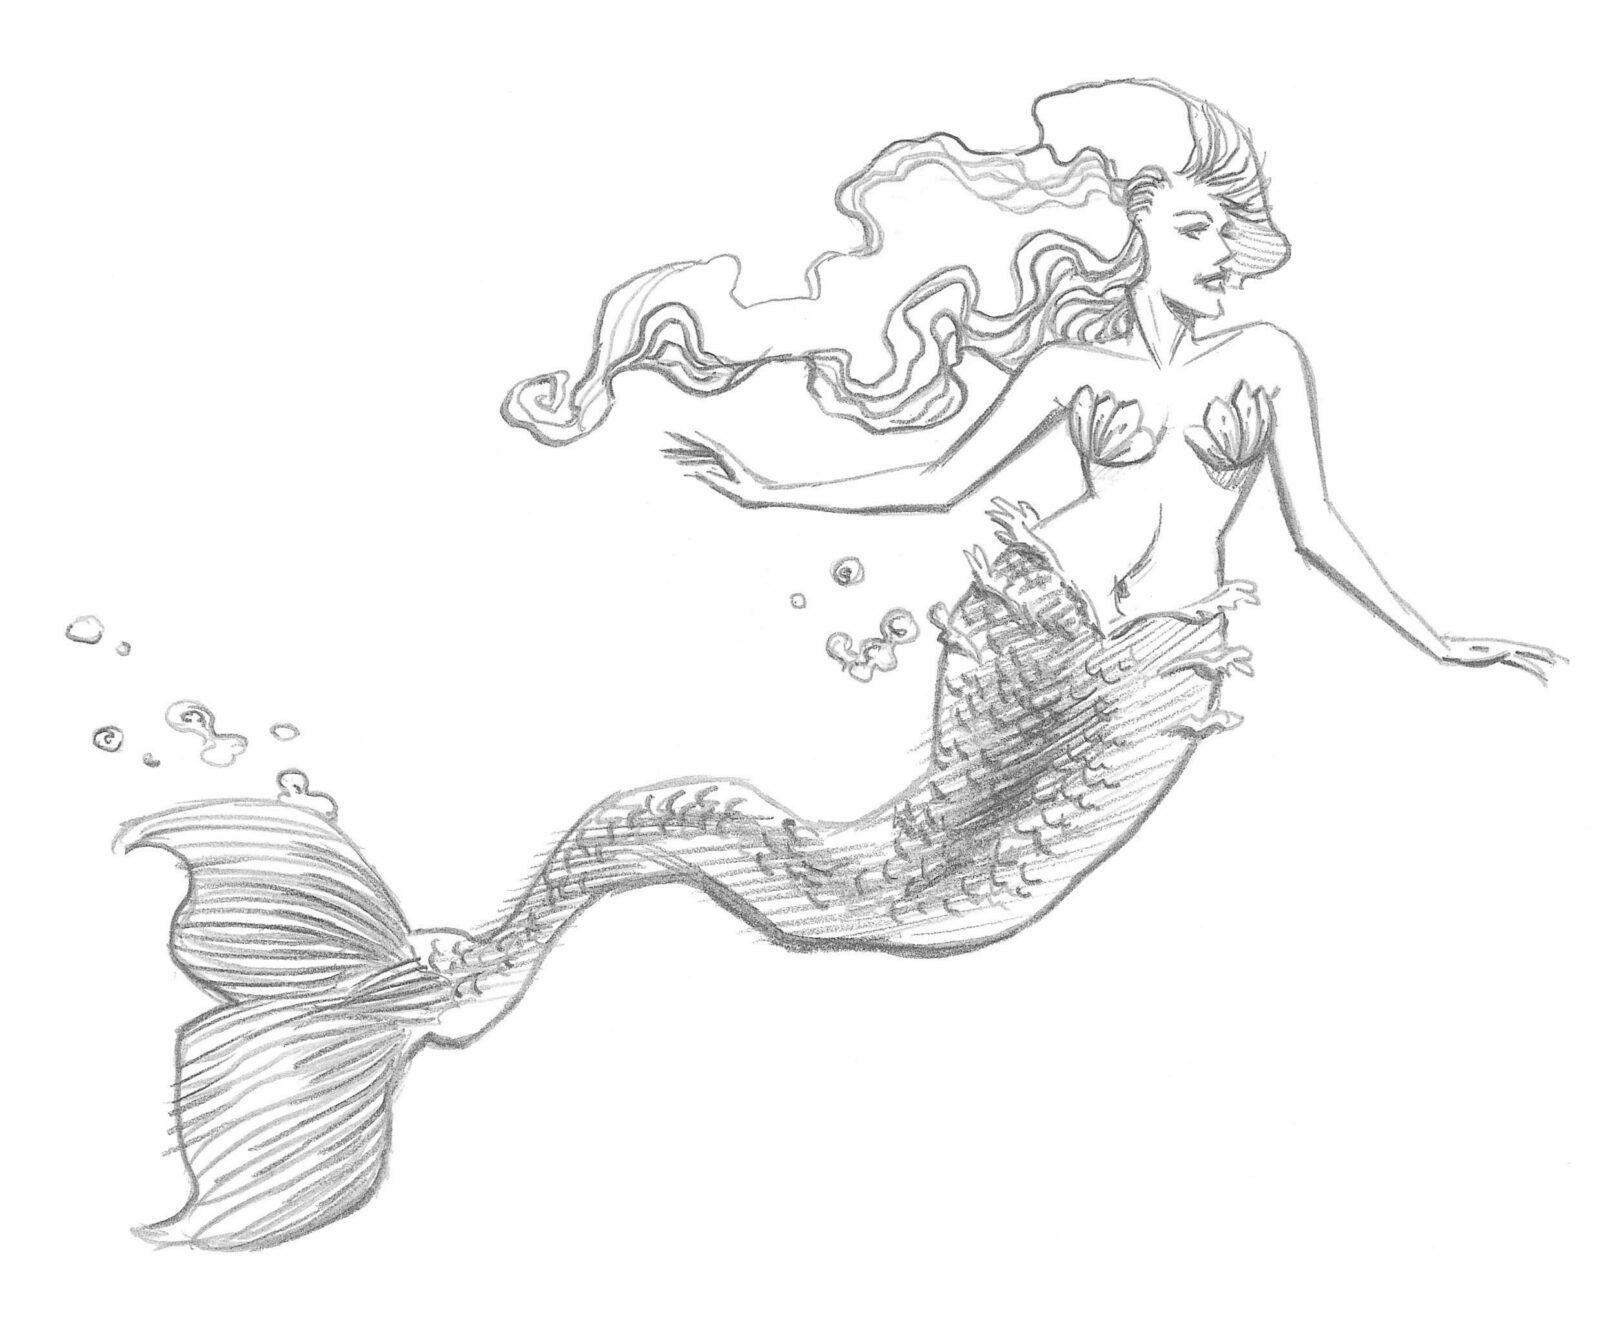 50+ Mermaid Drawing Ideas - How to Draw a Mermaid? | HARUNMUDAK